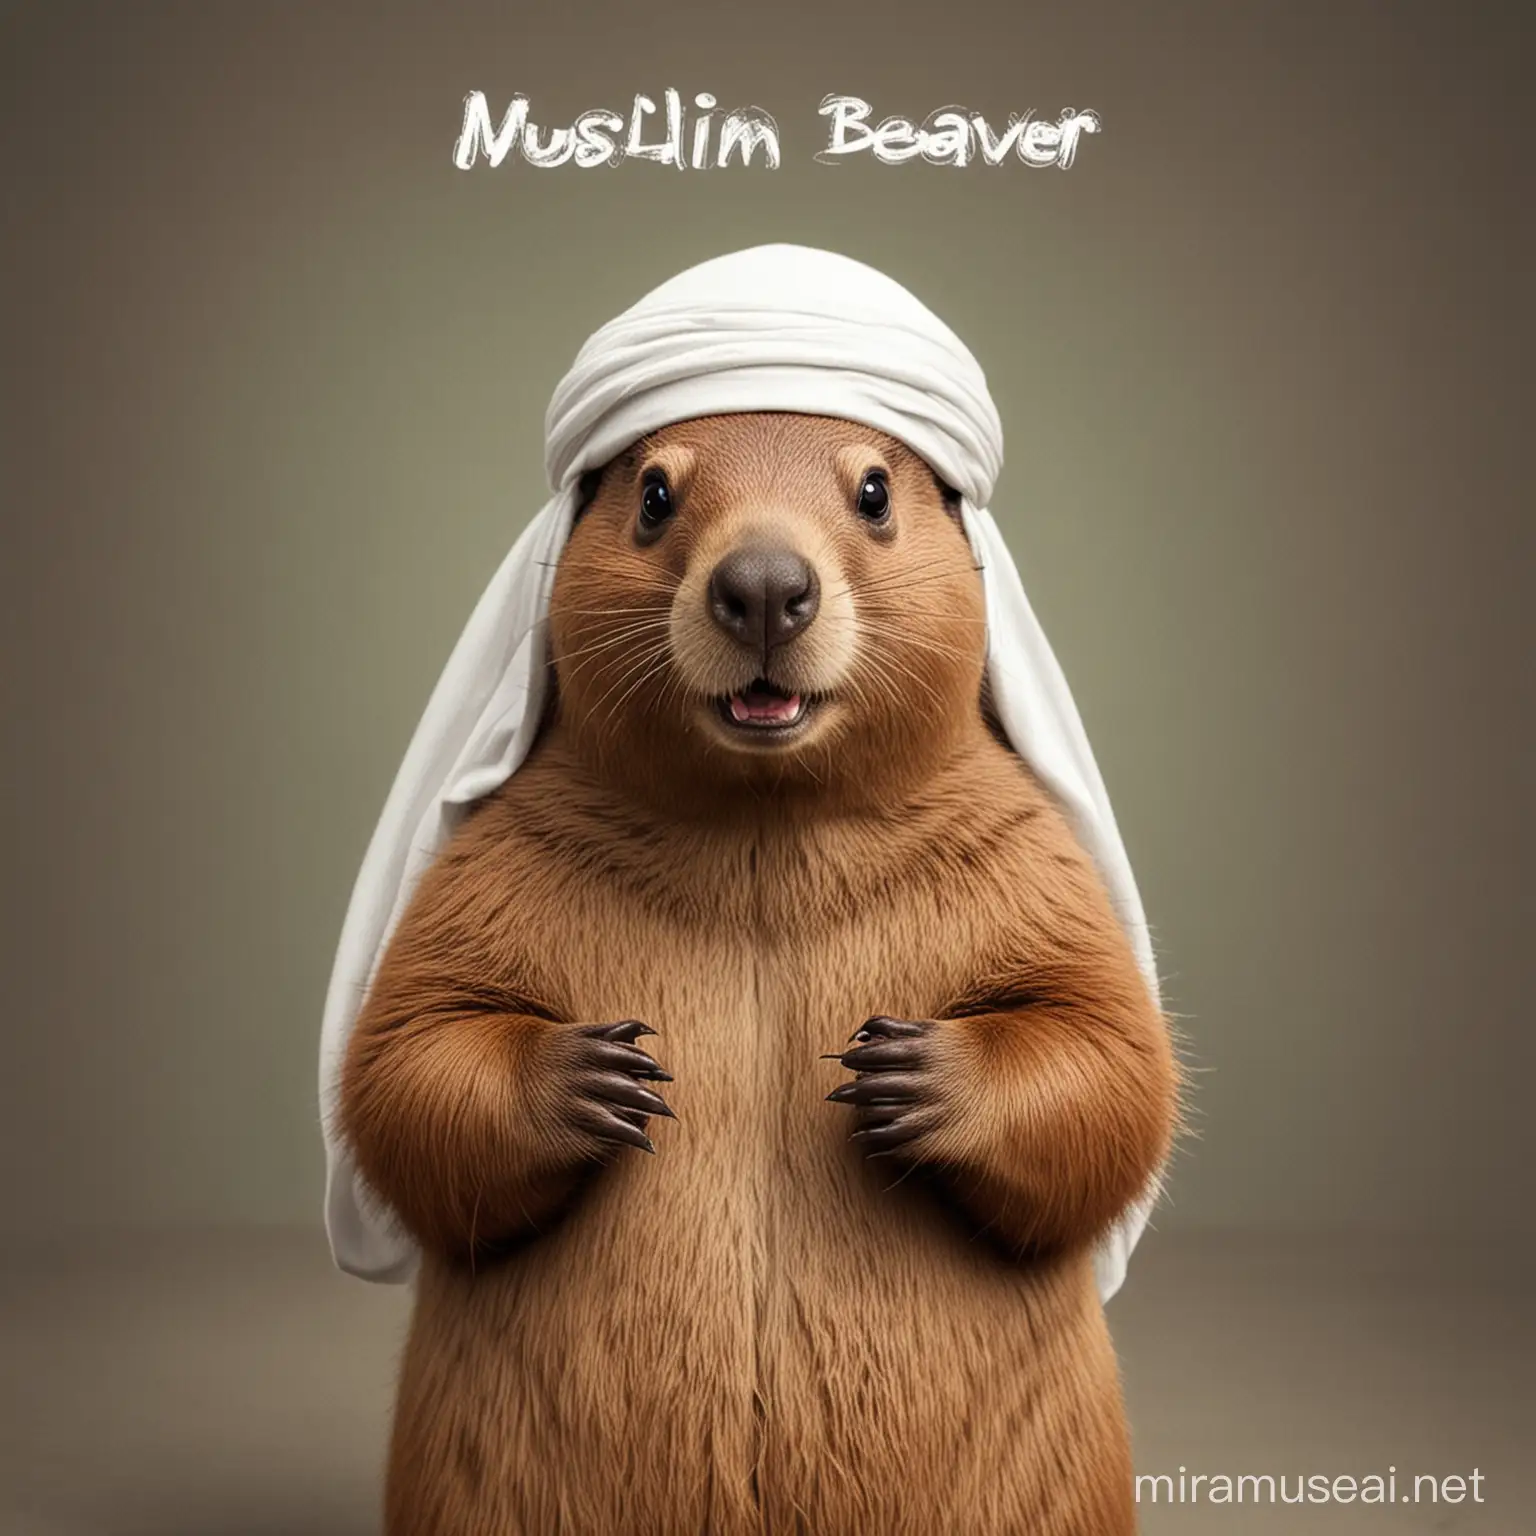 Cheerful Muslim Beaver Enjoying a Humorous Moment